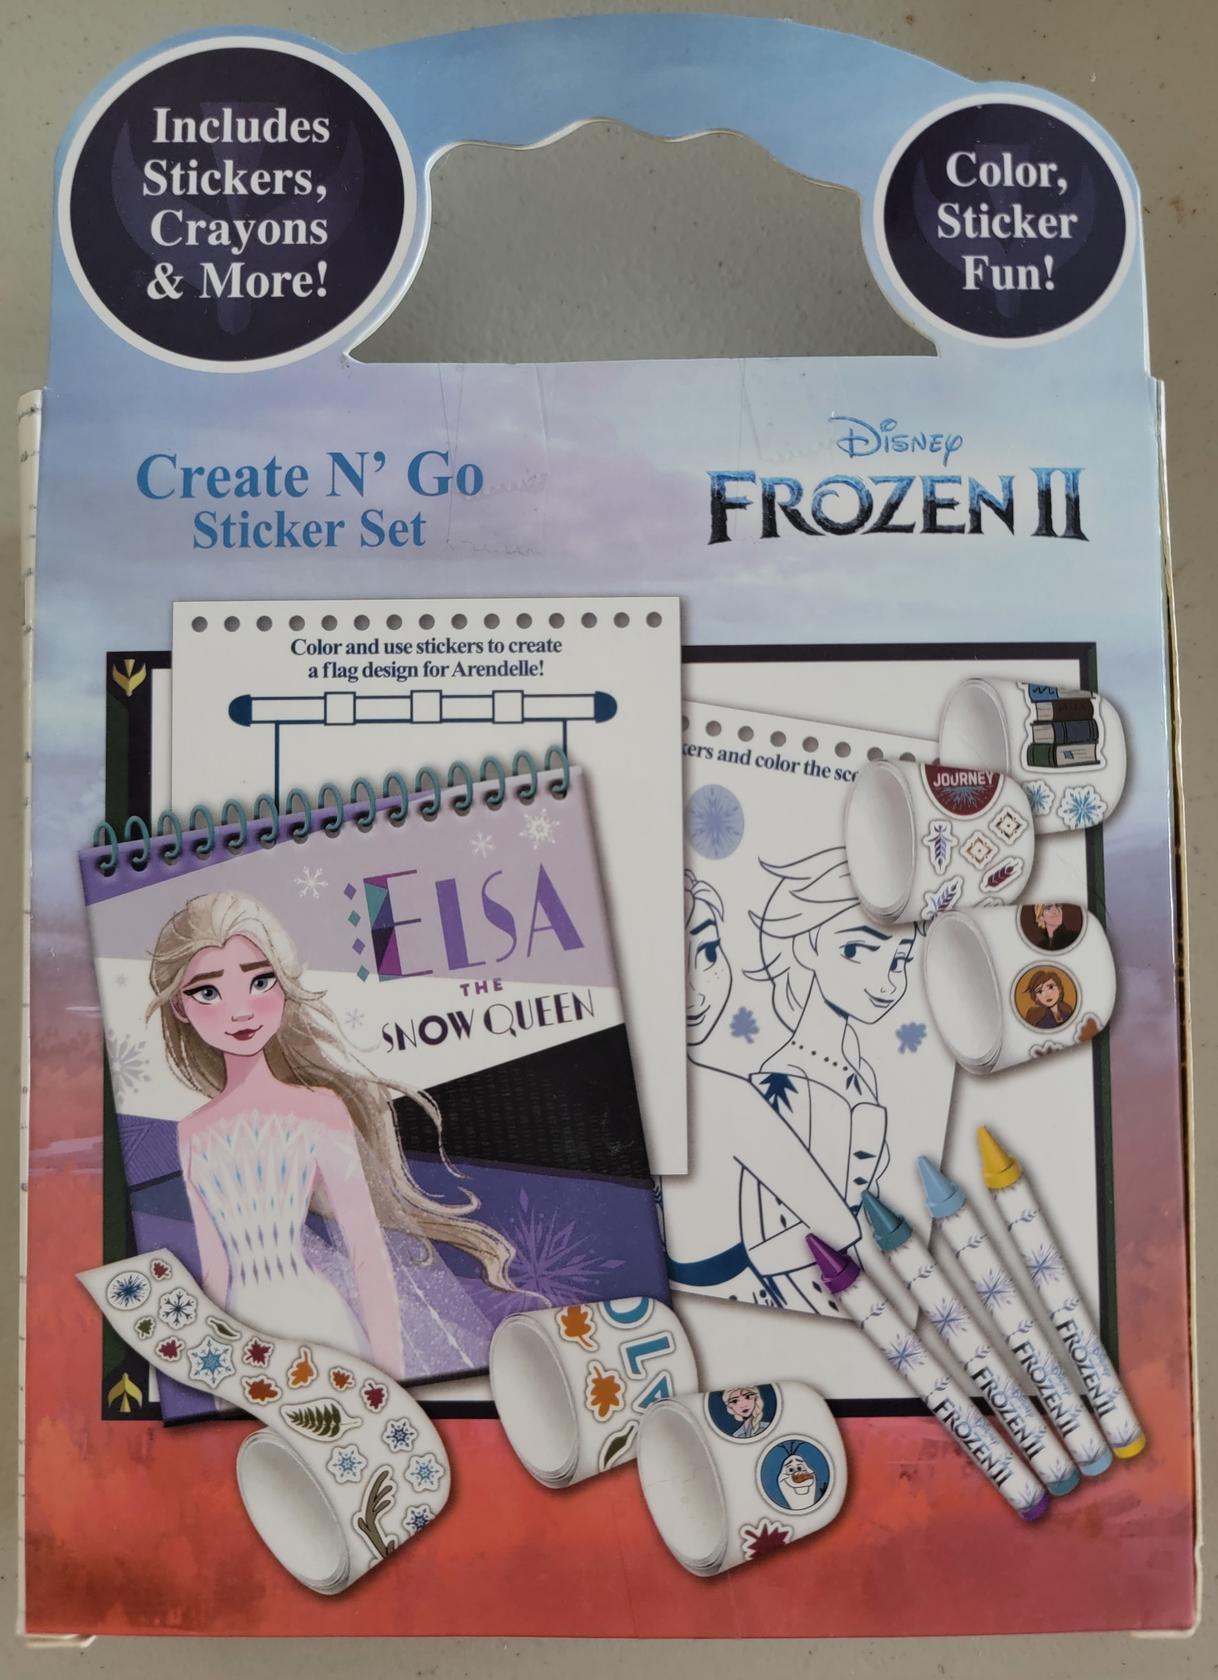 Disney Frozen II Create N' Go Sticker Set - image 1 of 2